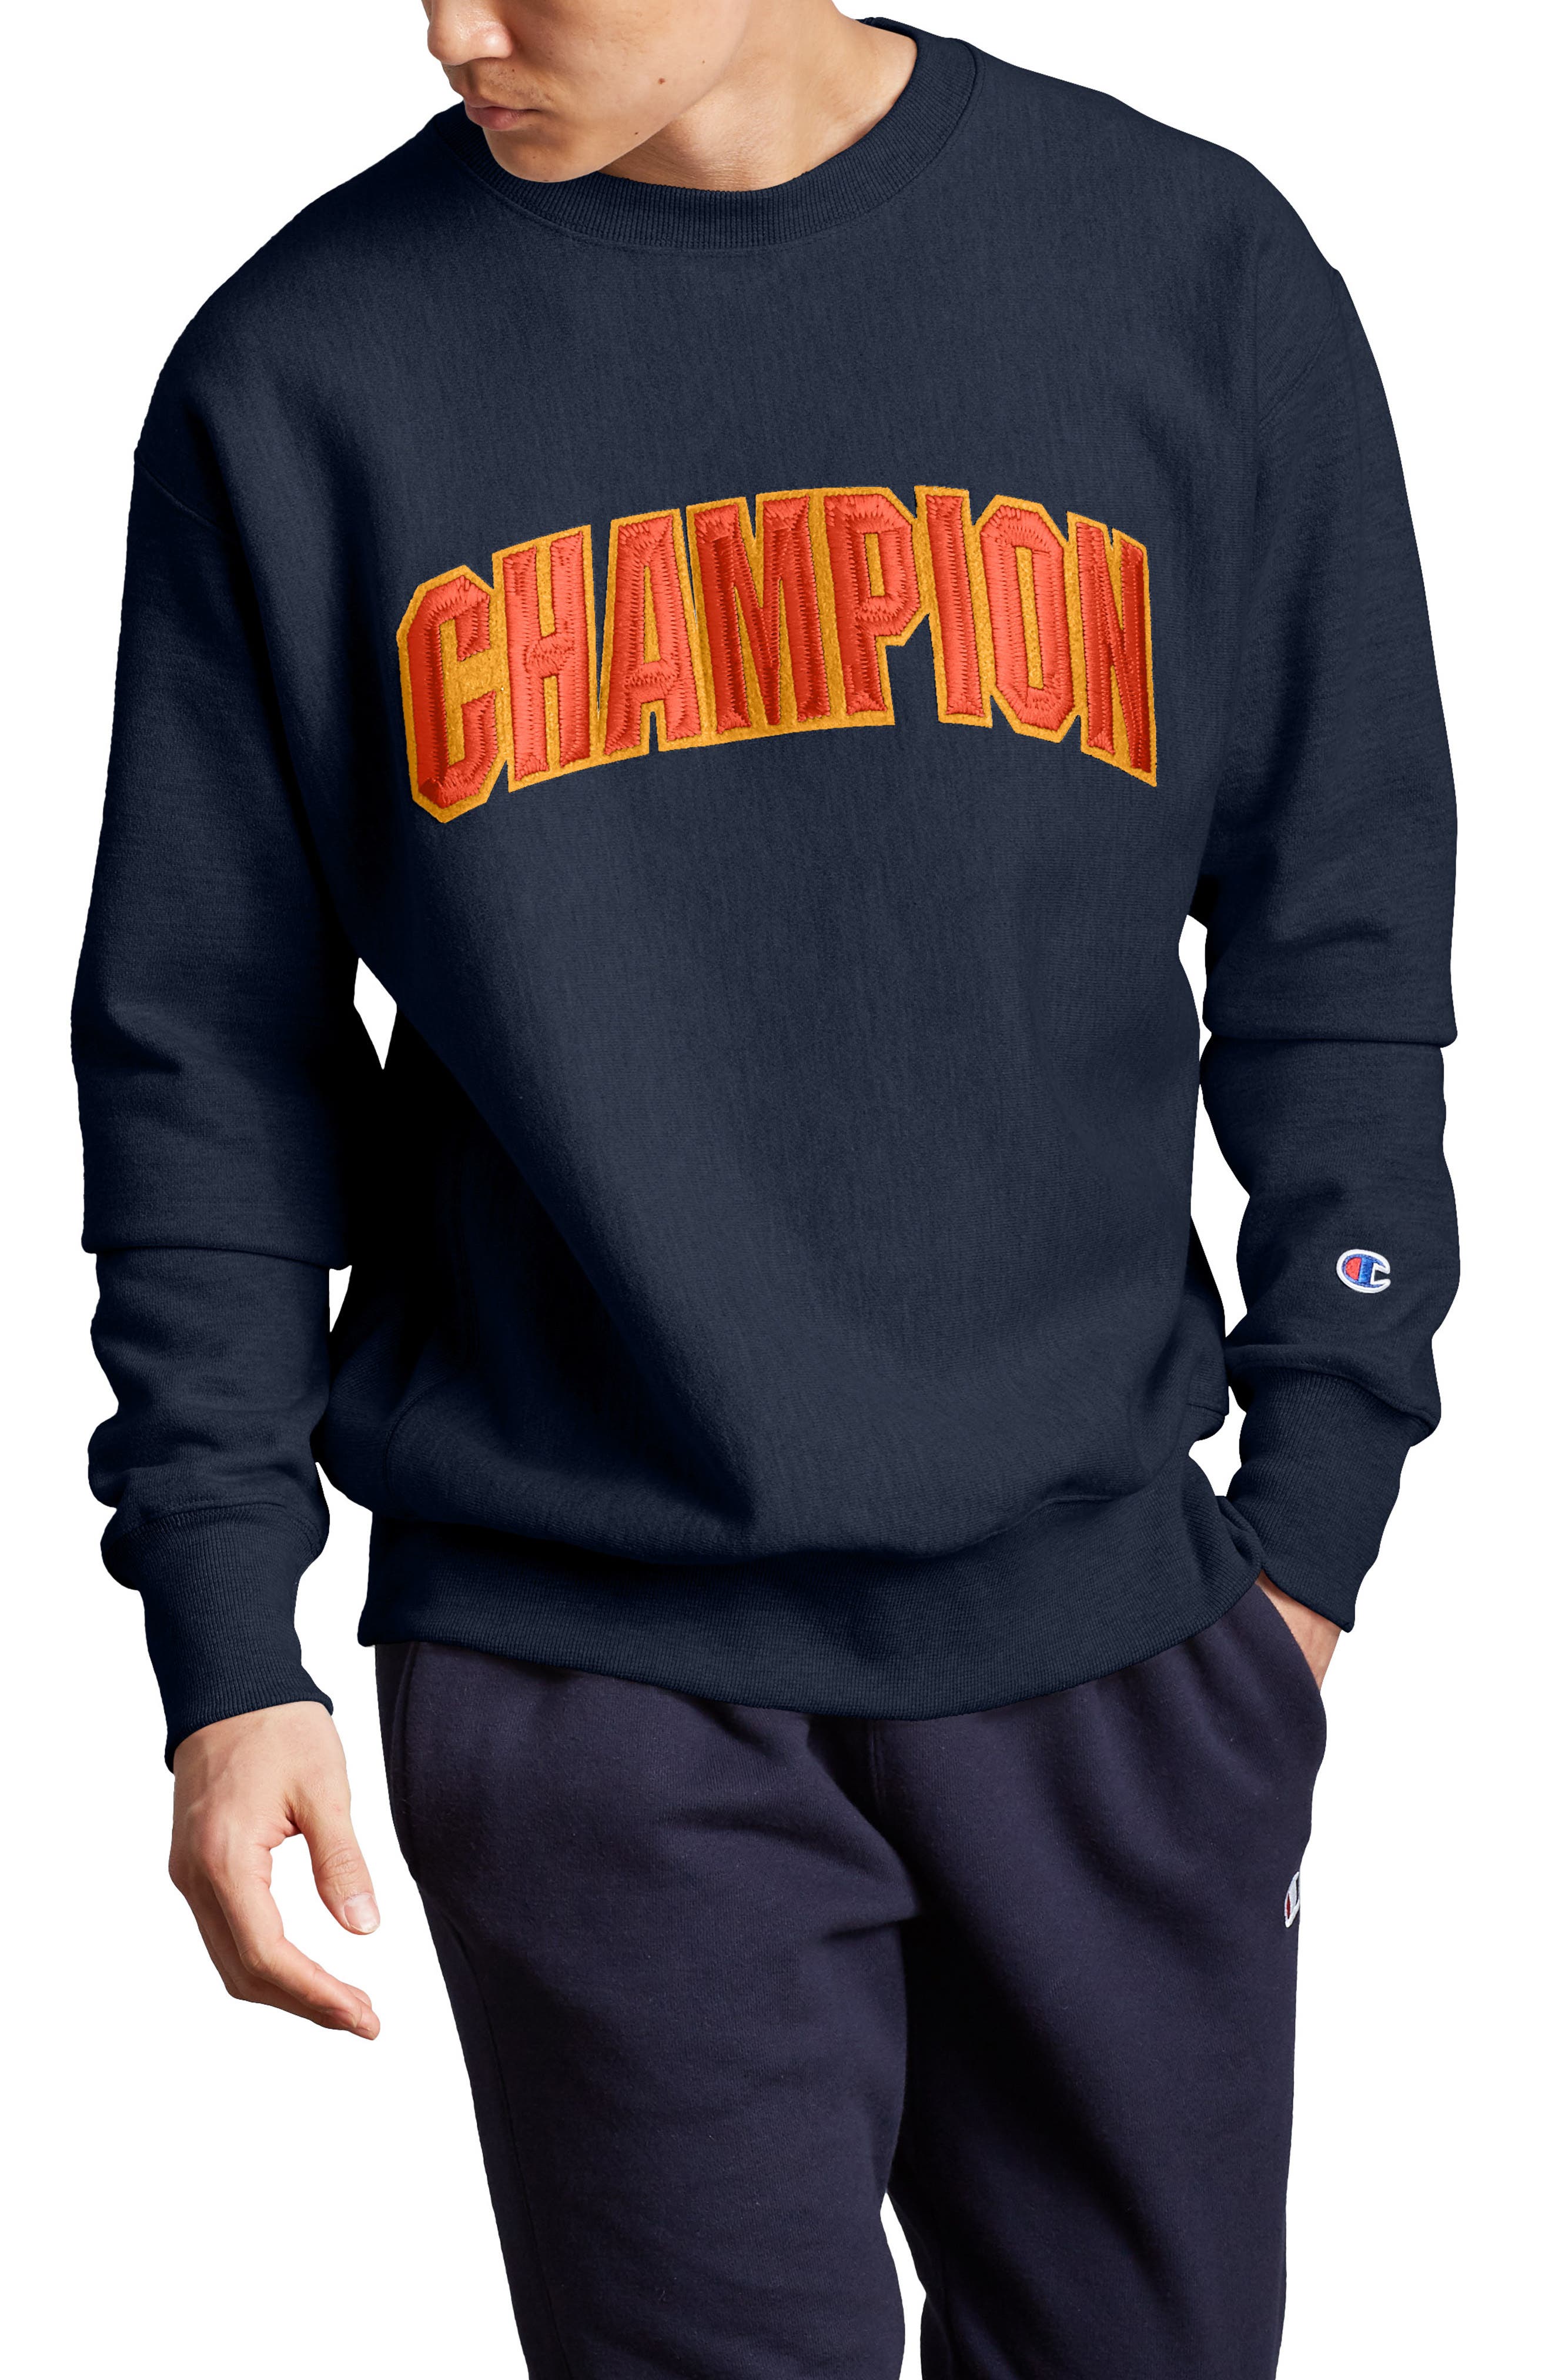 nordstrom champion sweatshirt